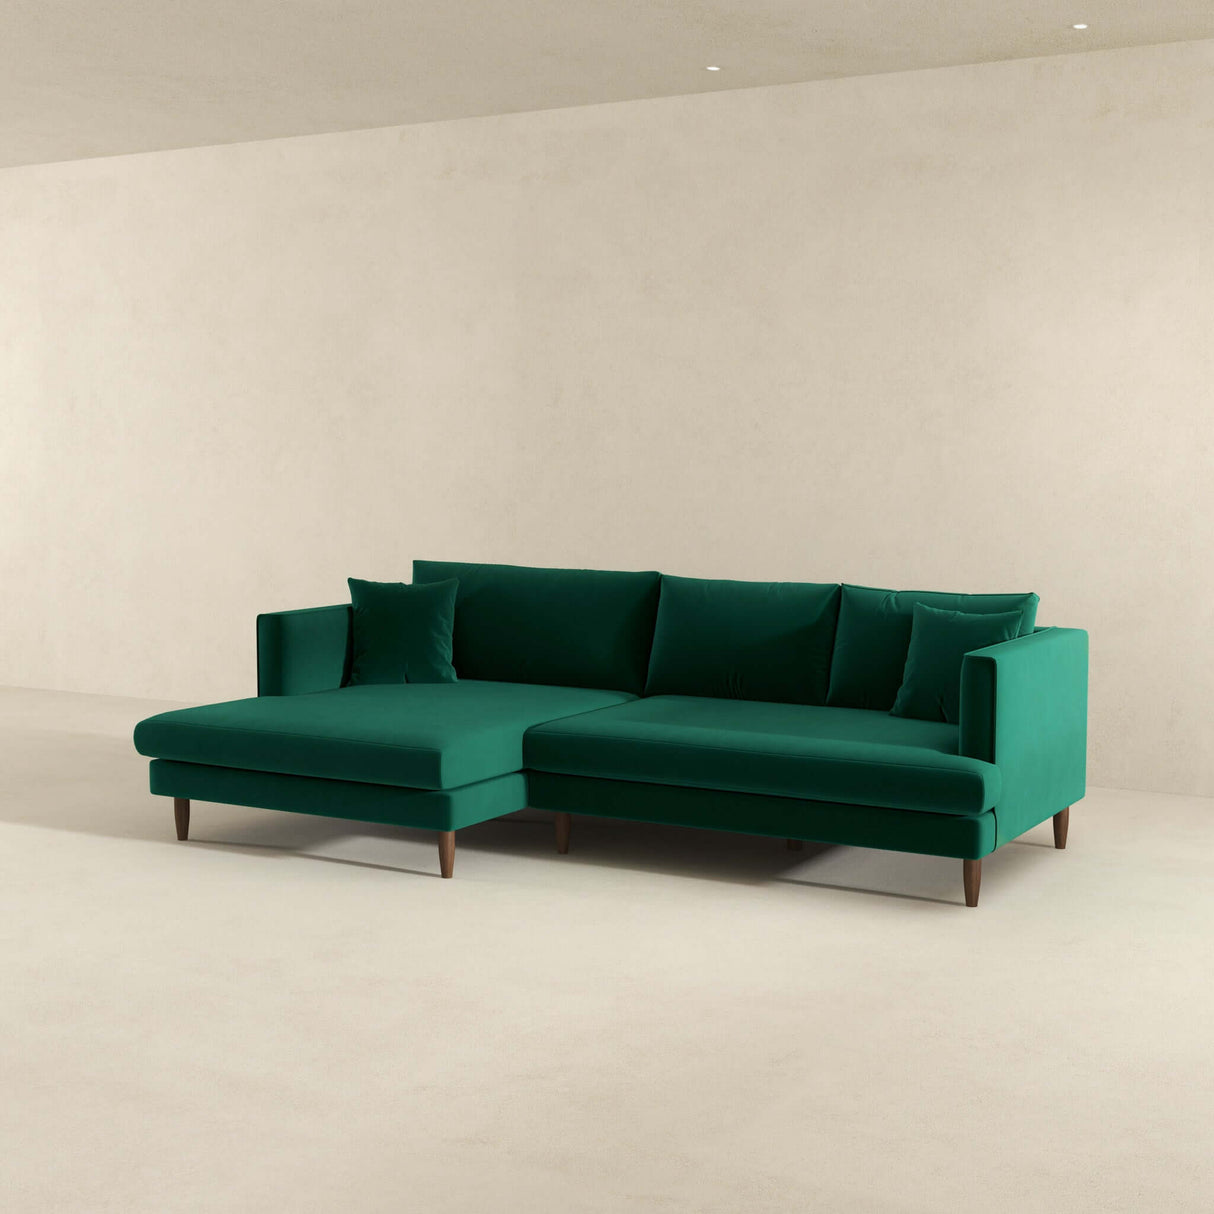 Blake L-Shaped  Sectional Sofa Grey Linen / Right Facing - AFC00655 - Luna Furniture